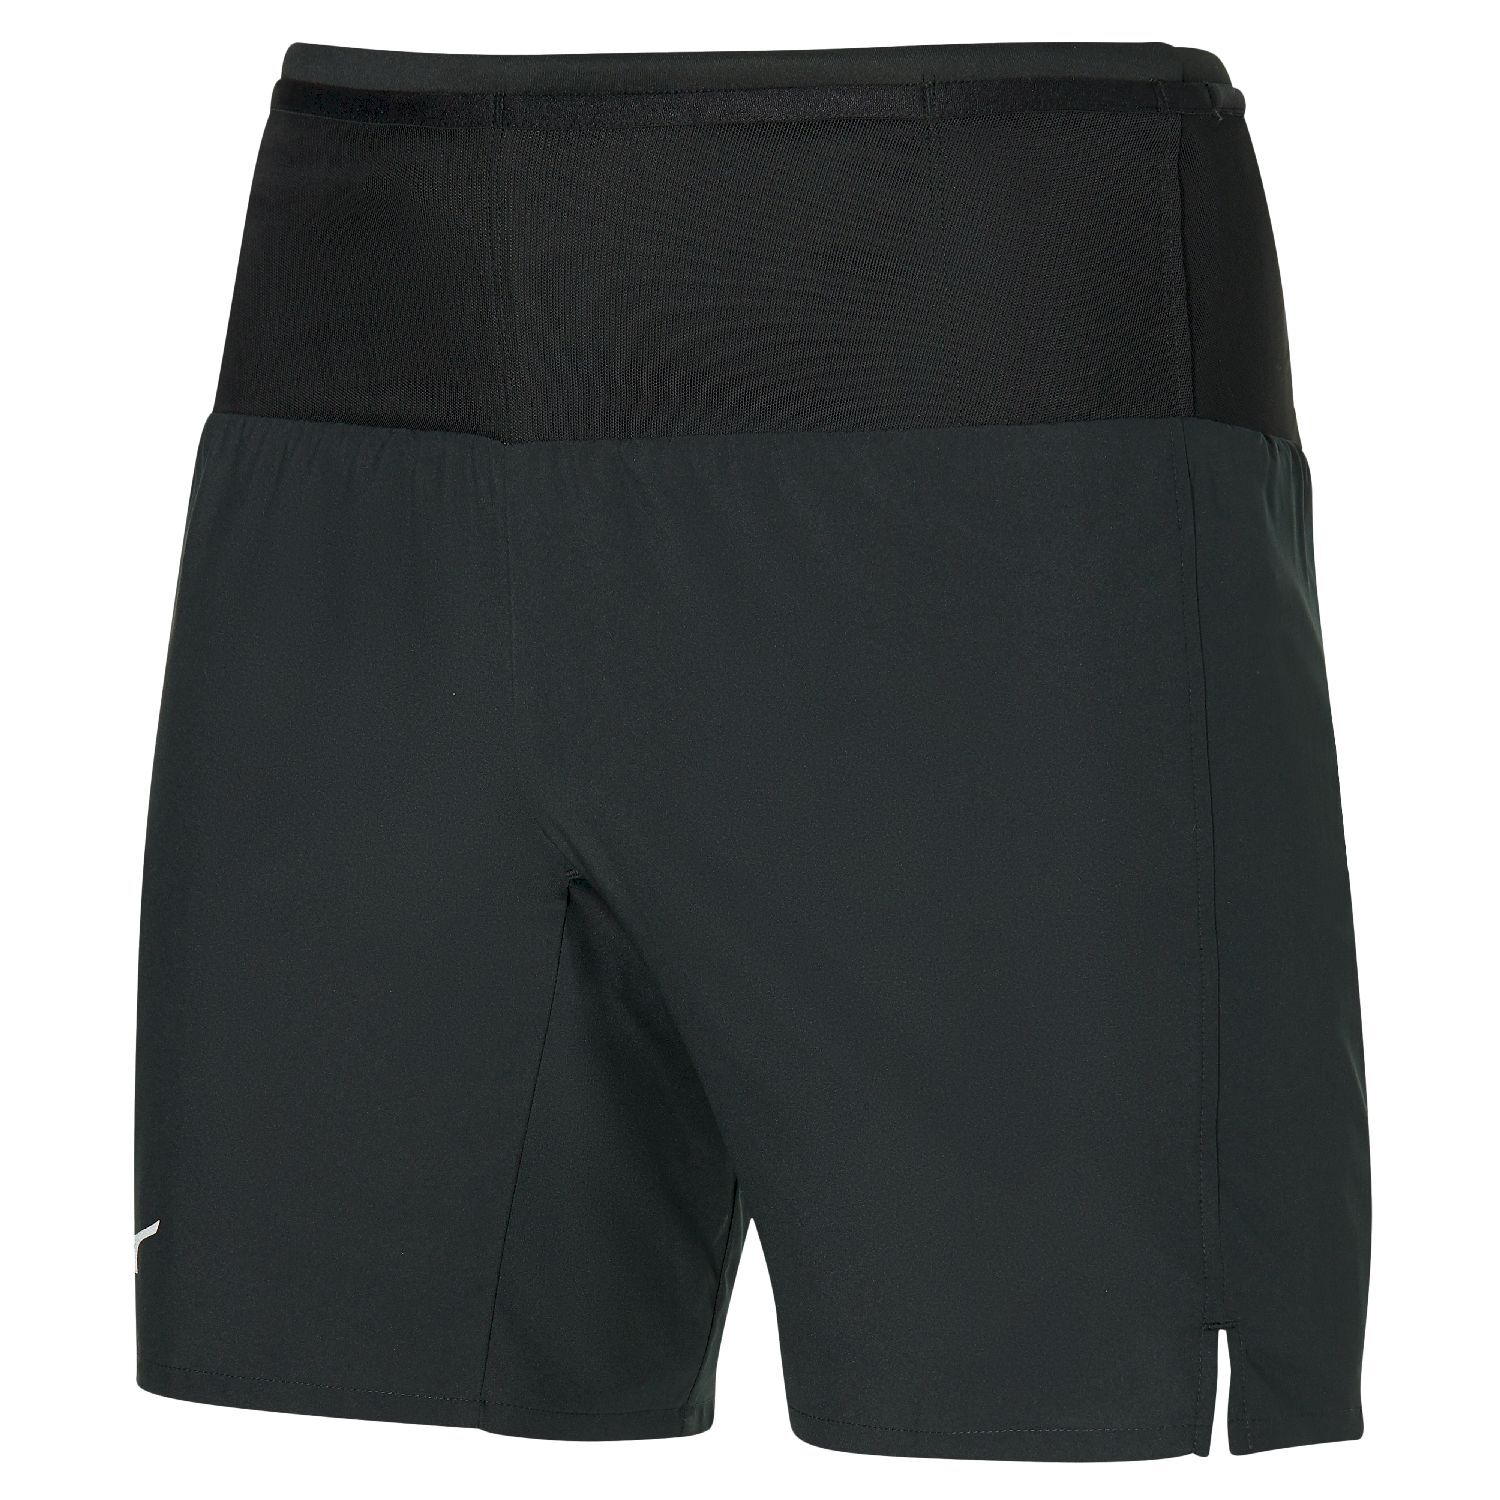 Mizuno Multi Pocket Short Dry - Running shorts - Men's